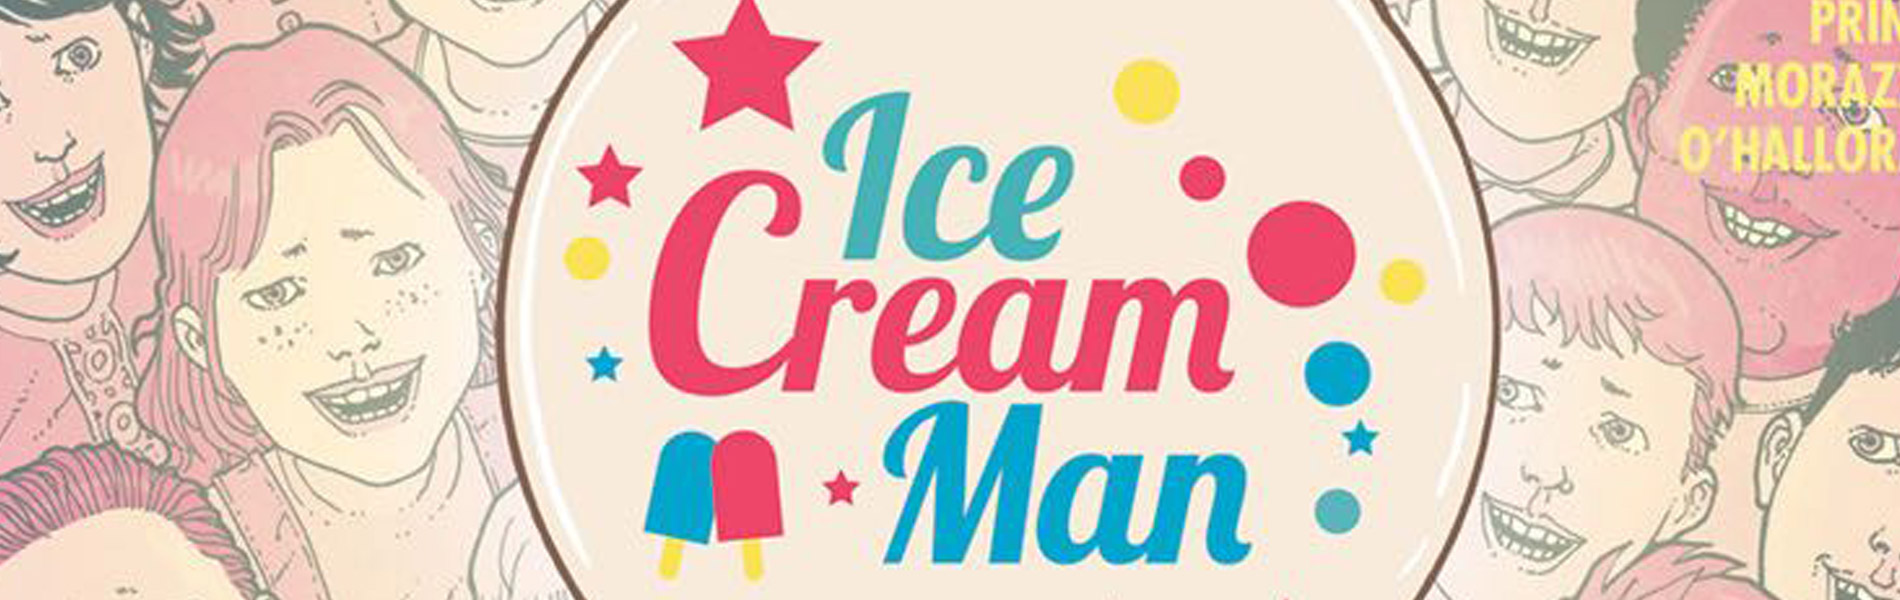 God of Comics – Ice Cream Man #1